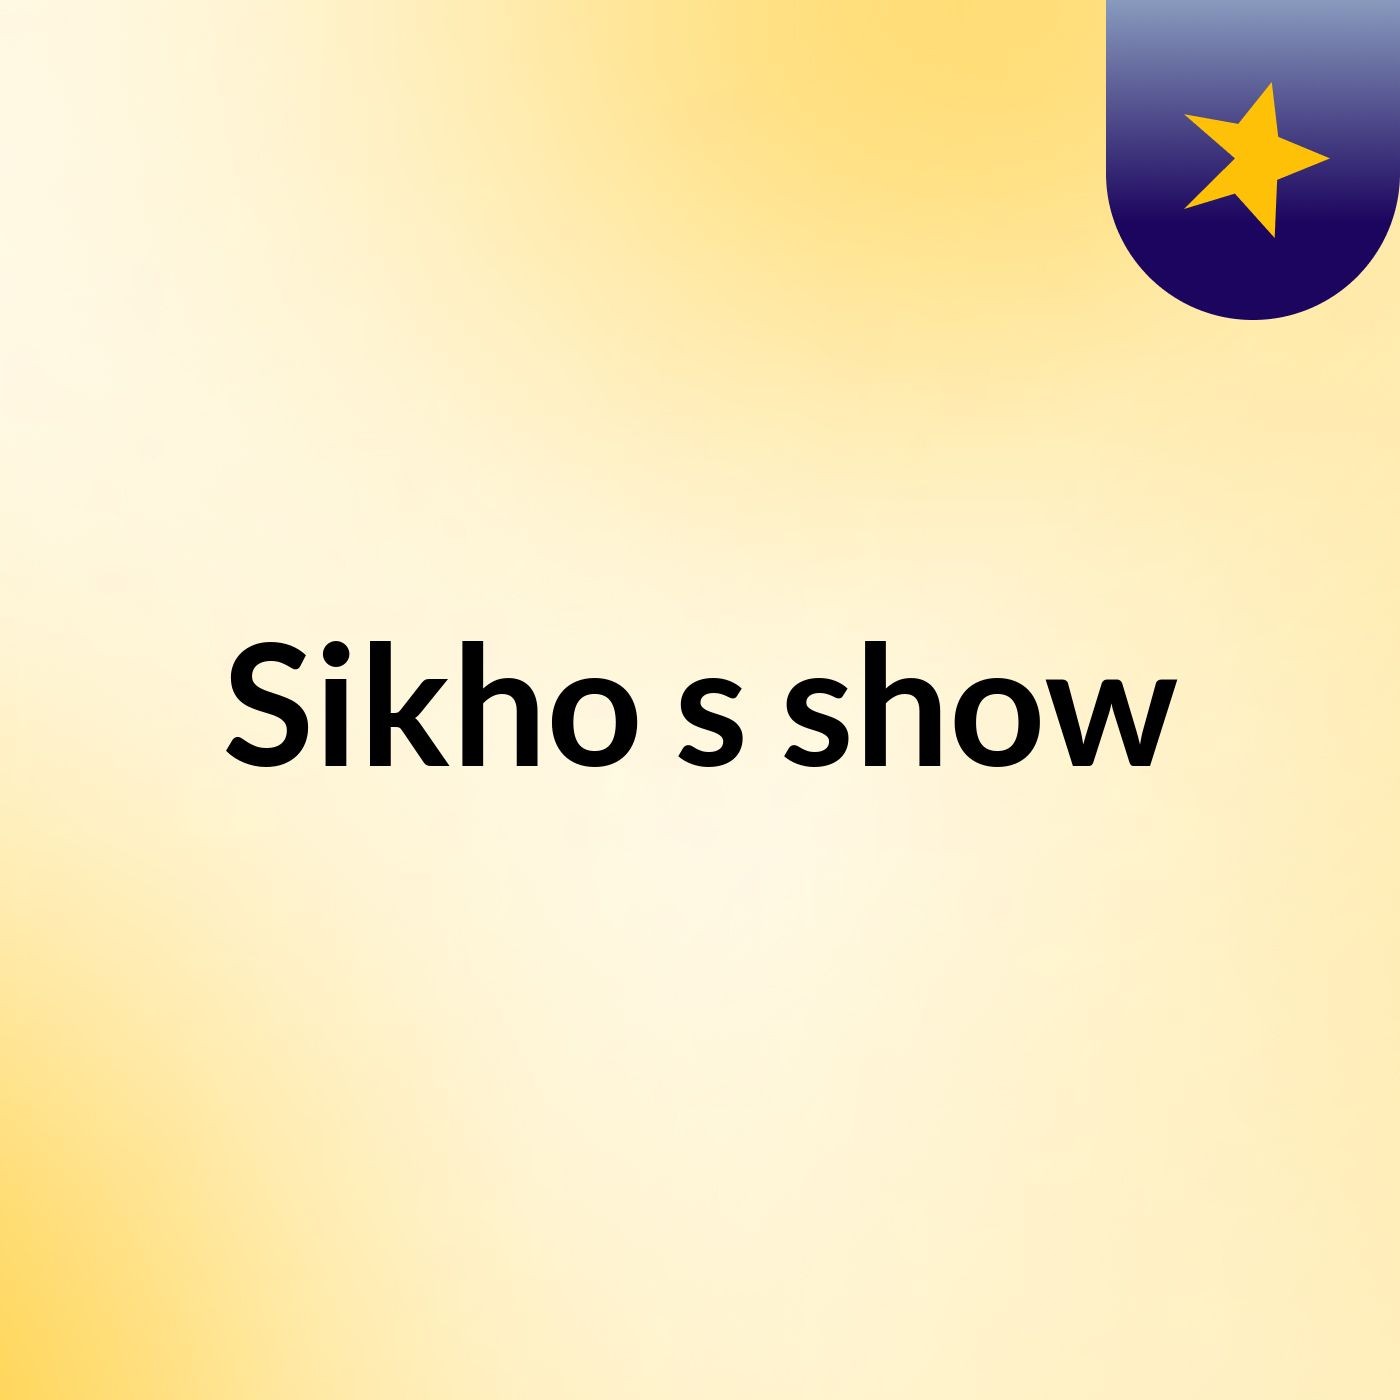 Sikho's show